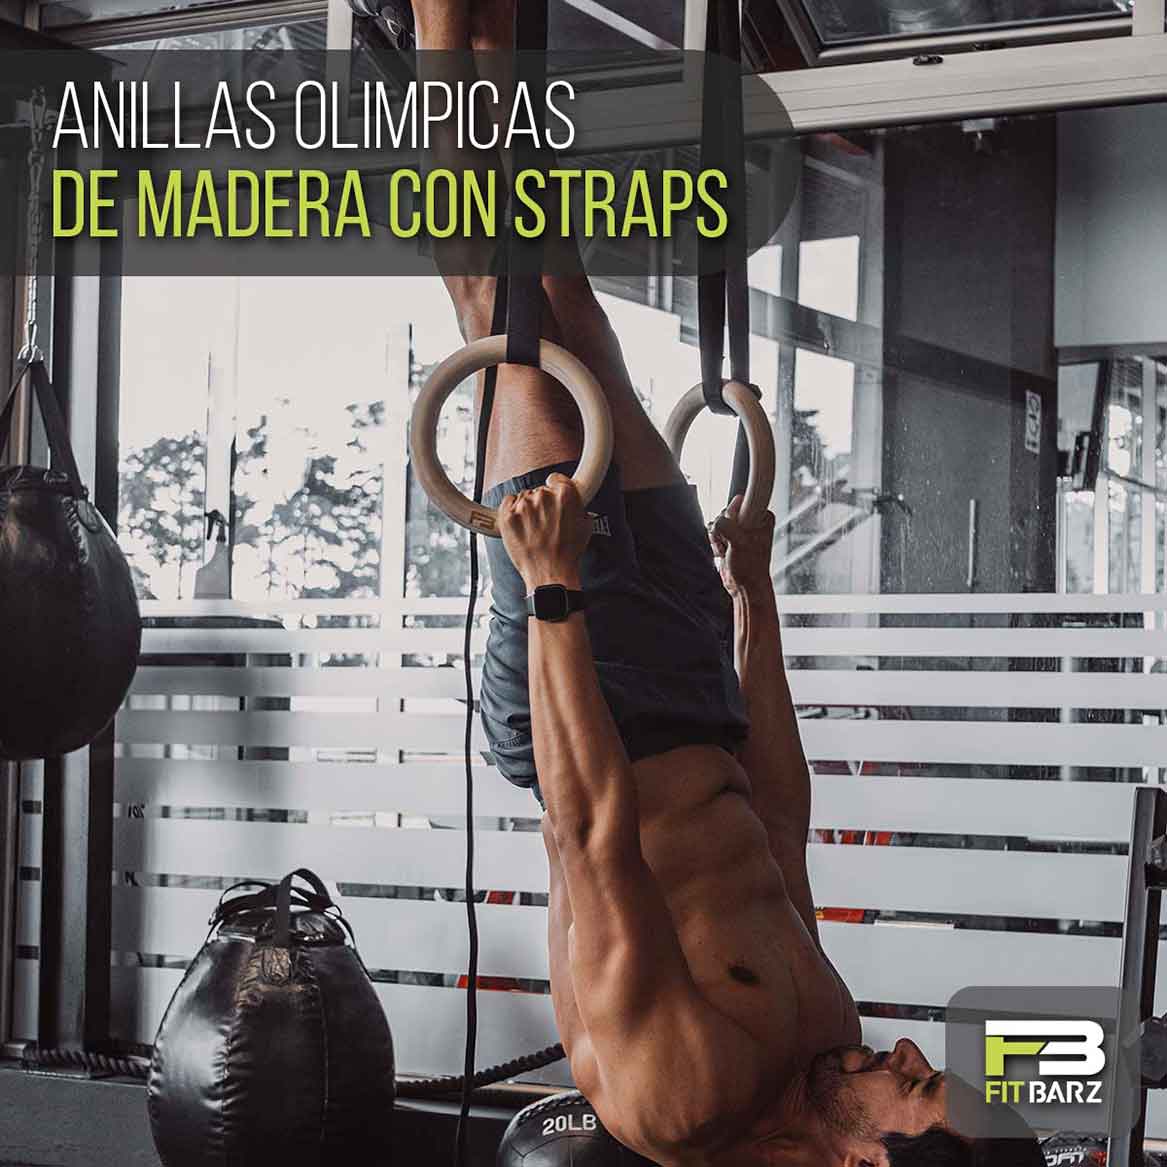 ANILLAS XSTEP CALISTENIA DE MADERA C/CORREAS – Tienda Sporthouse